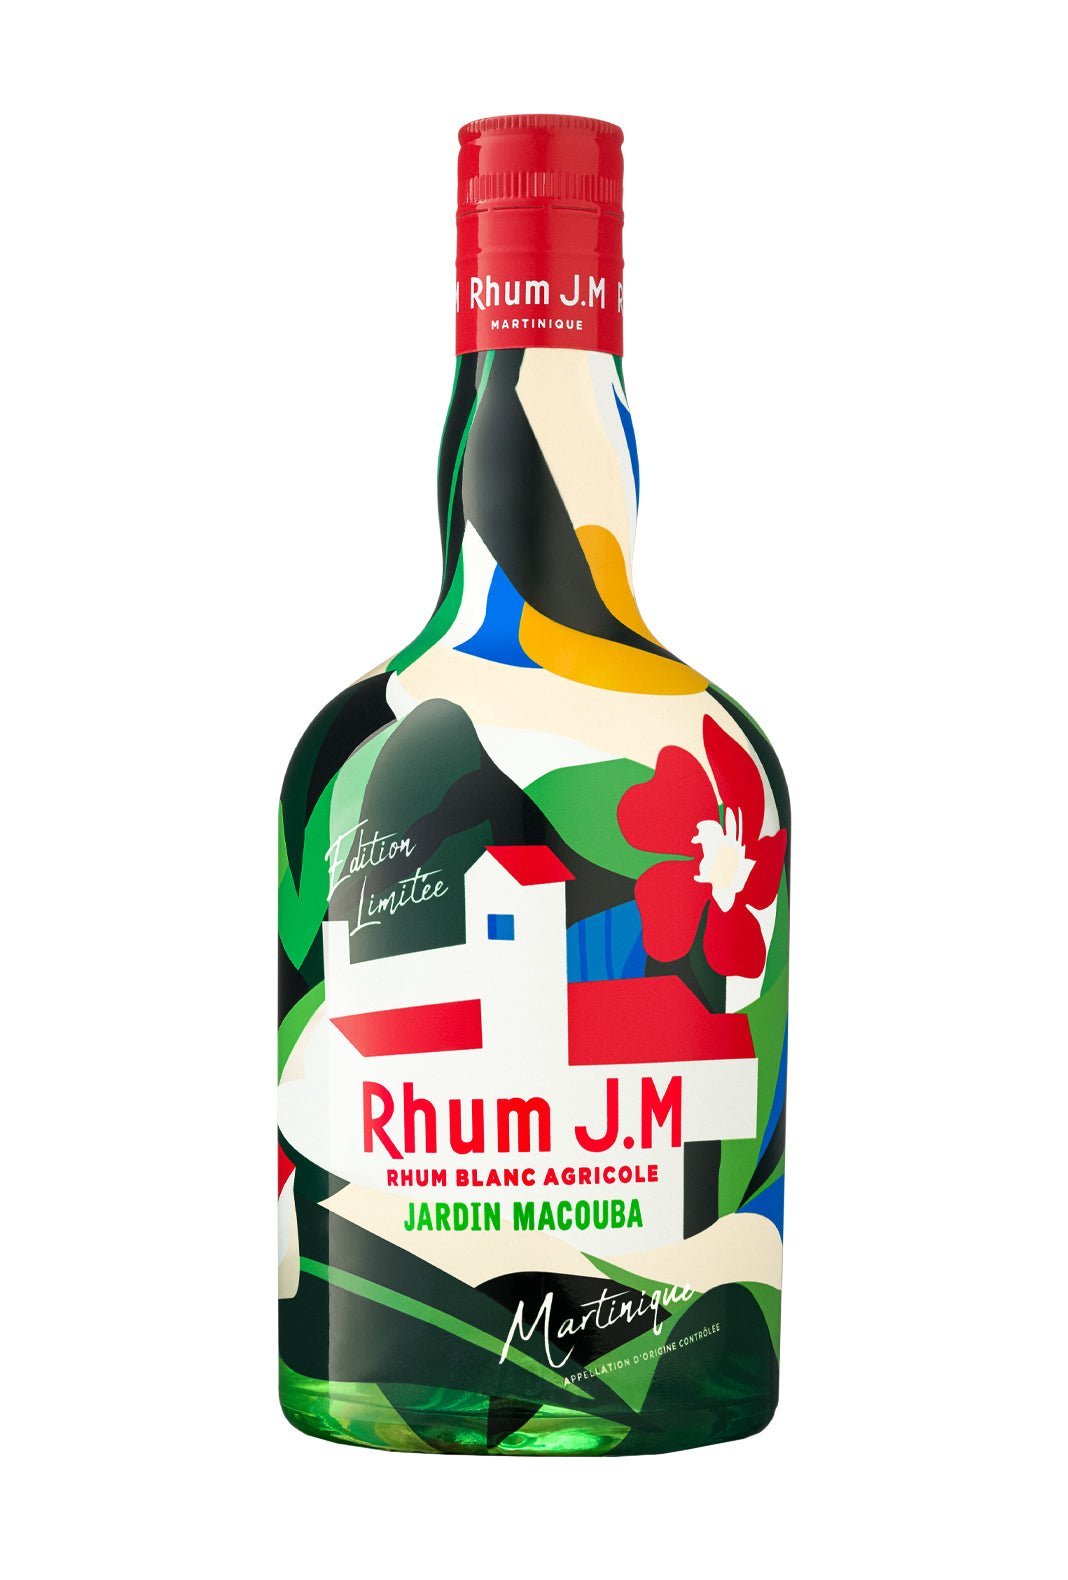 J.M Rhum Jardin Macouba White Agricole 53.4% 700ml | Rum | Shop online at Spirits of France